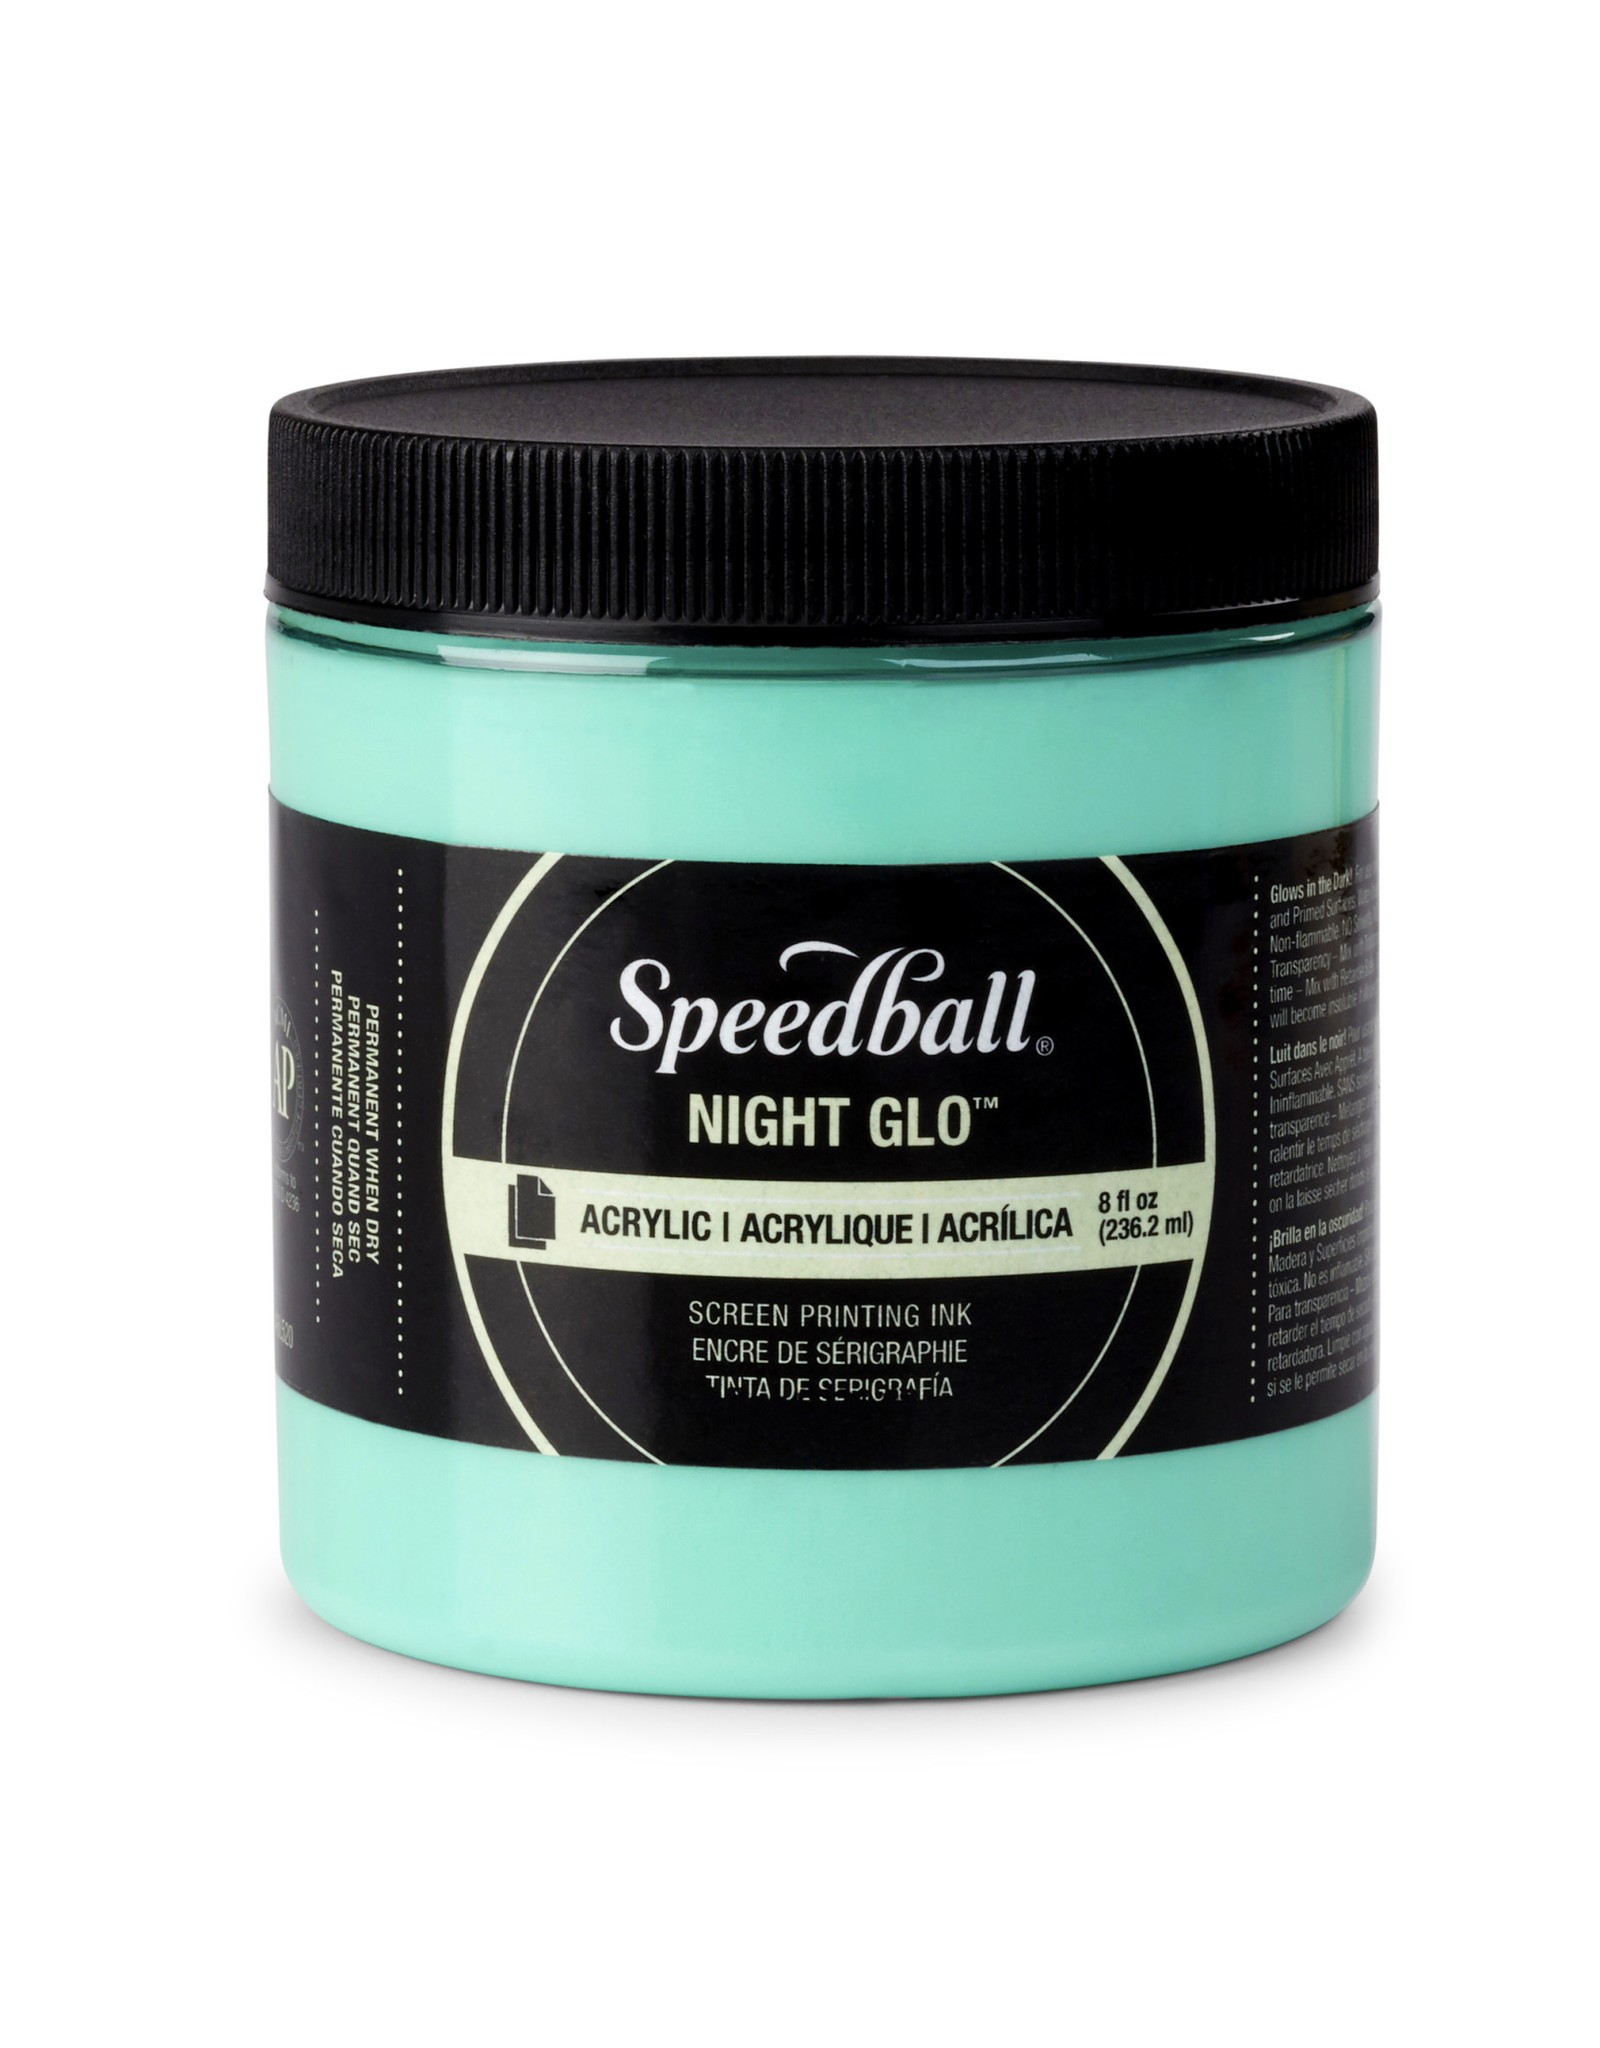 SPEEDBALL ART PRODUCTS Speedball Acrylic Screen Printing Ink, Night Glo Green, 8oz